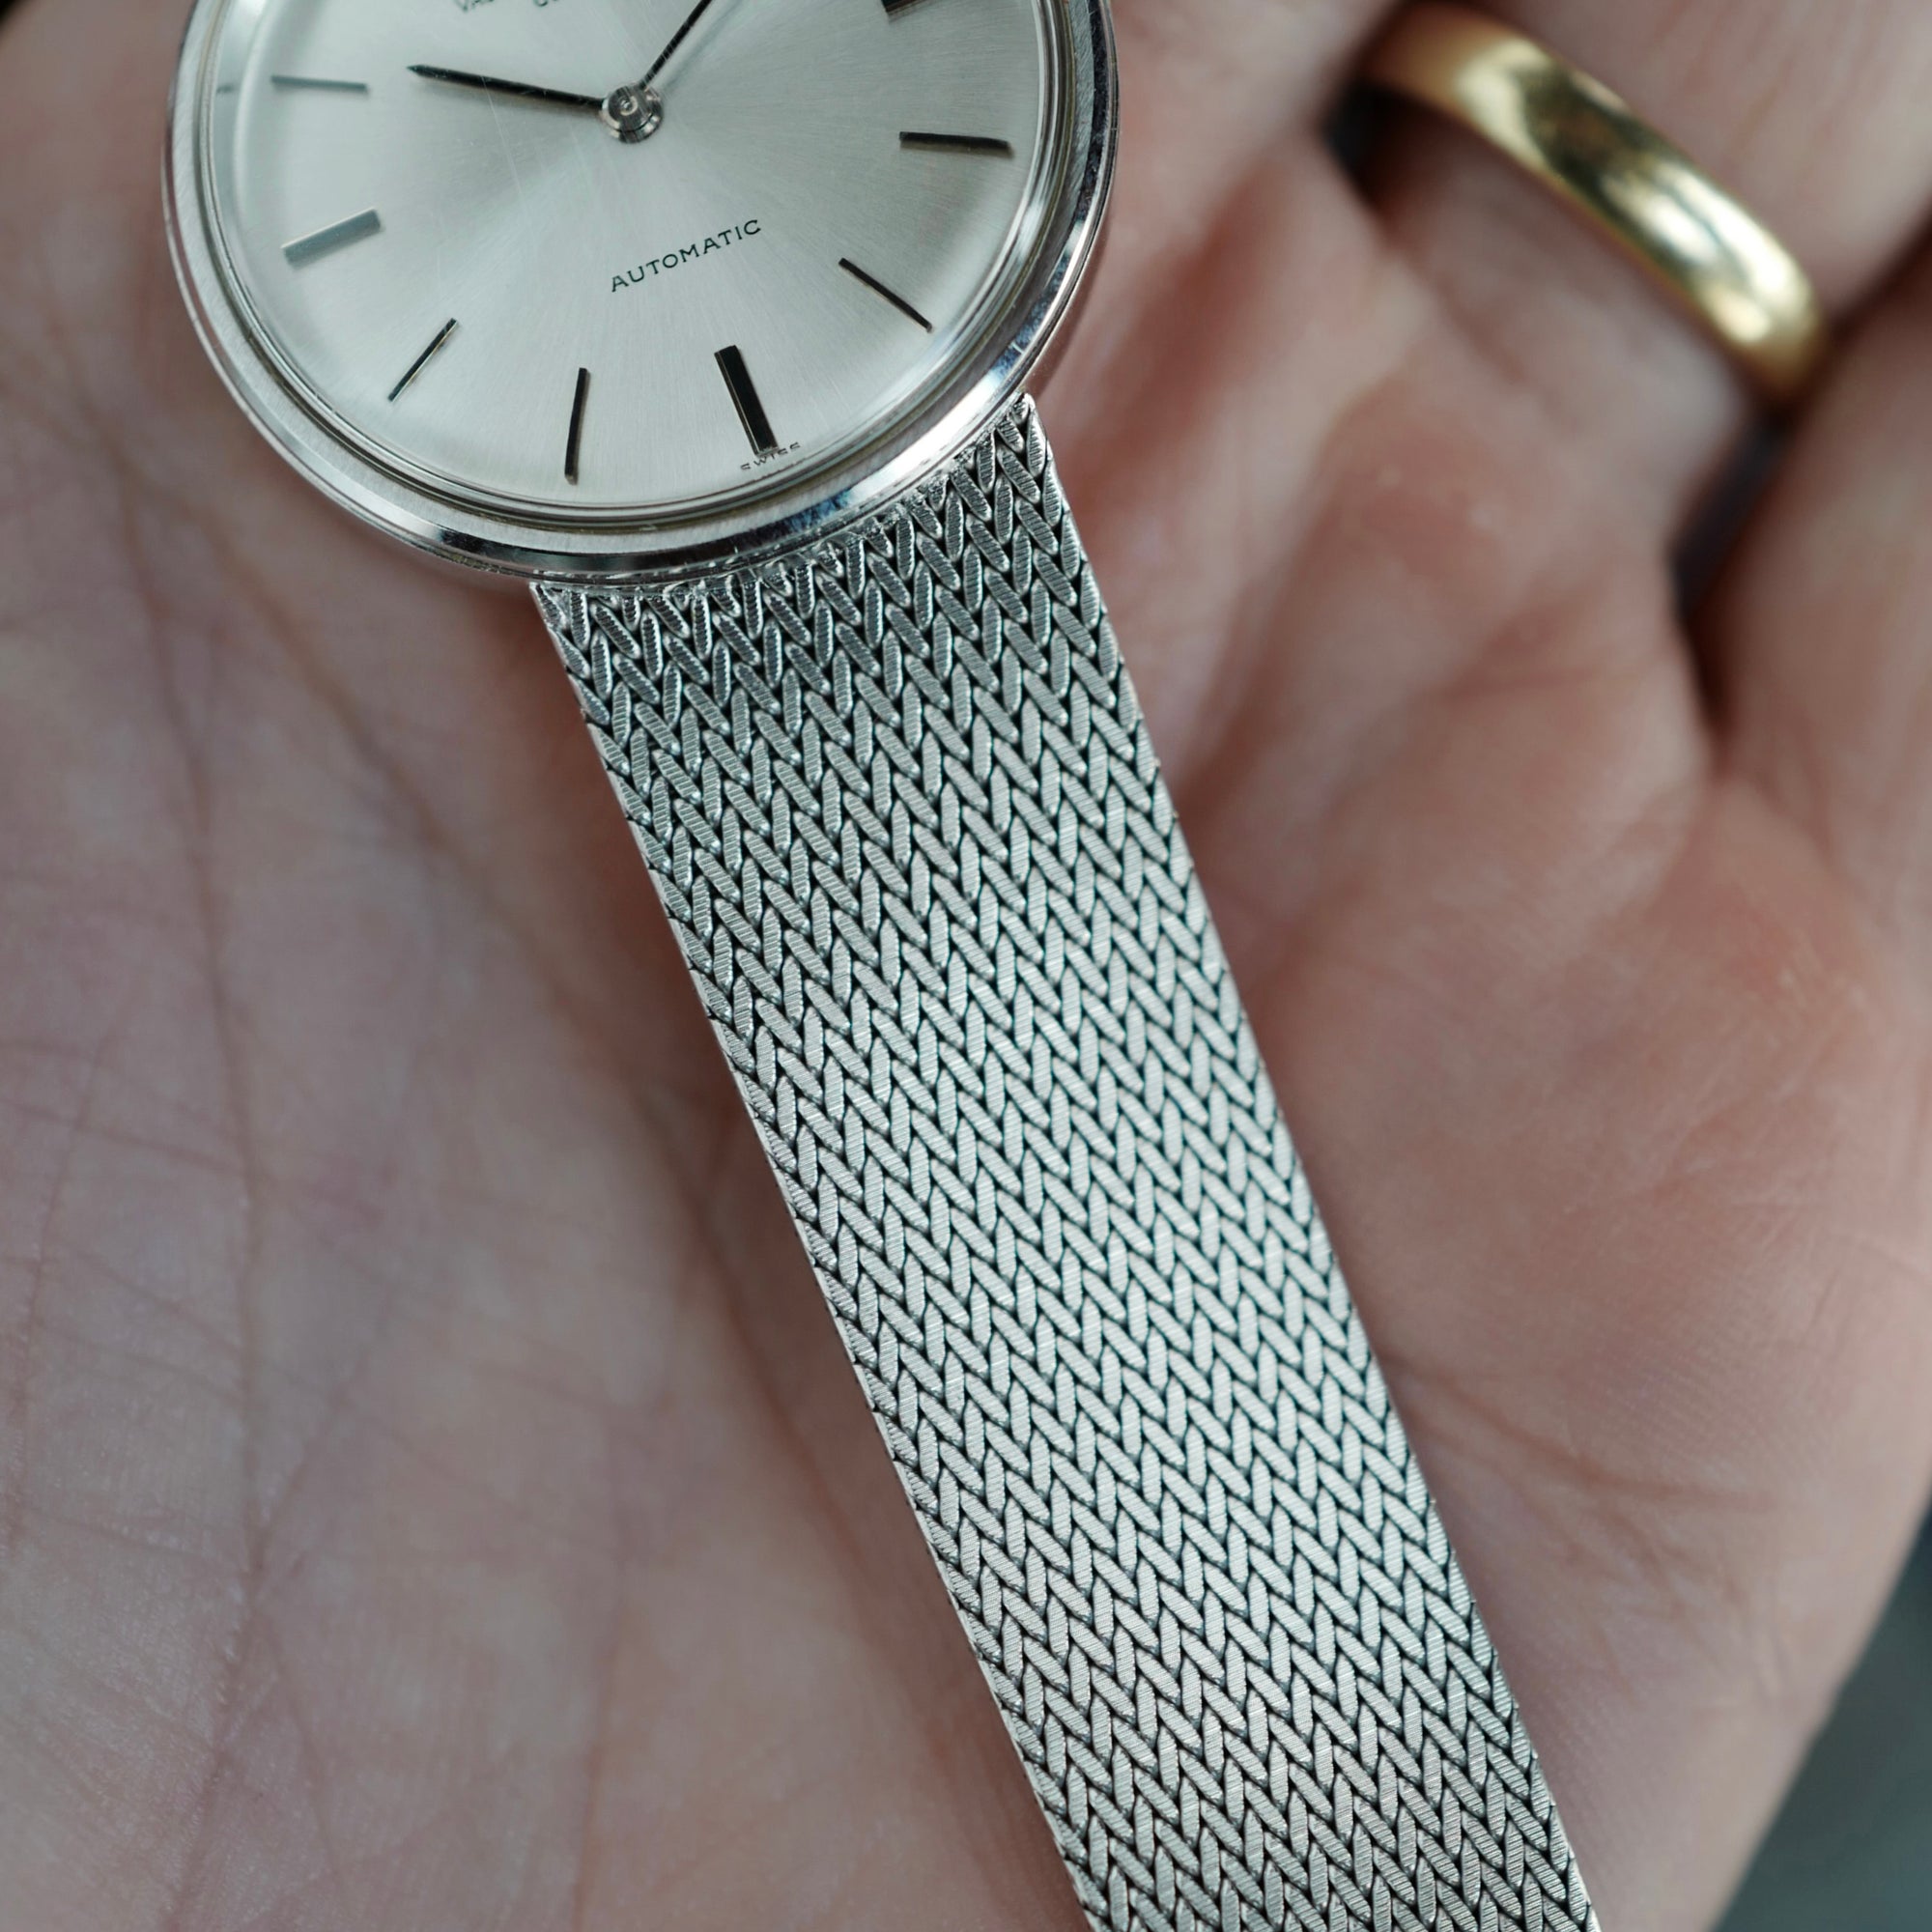 Vacheron Constantin - Vacheron Constantin White Gold Automatic Watch (NEW ARRIVAL) - The Keystone Watches